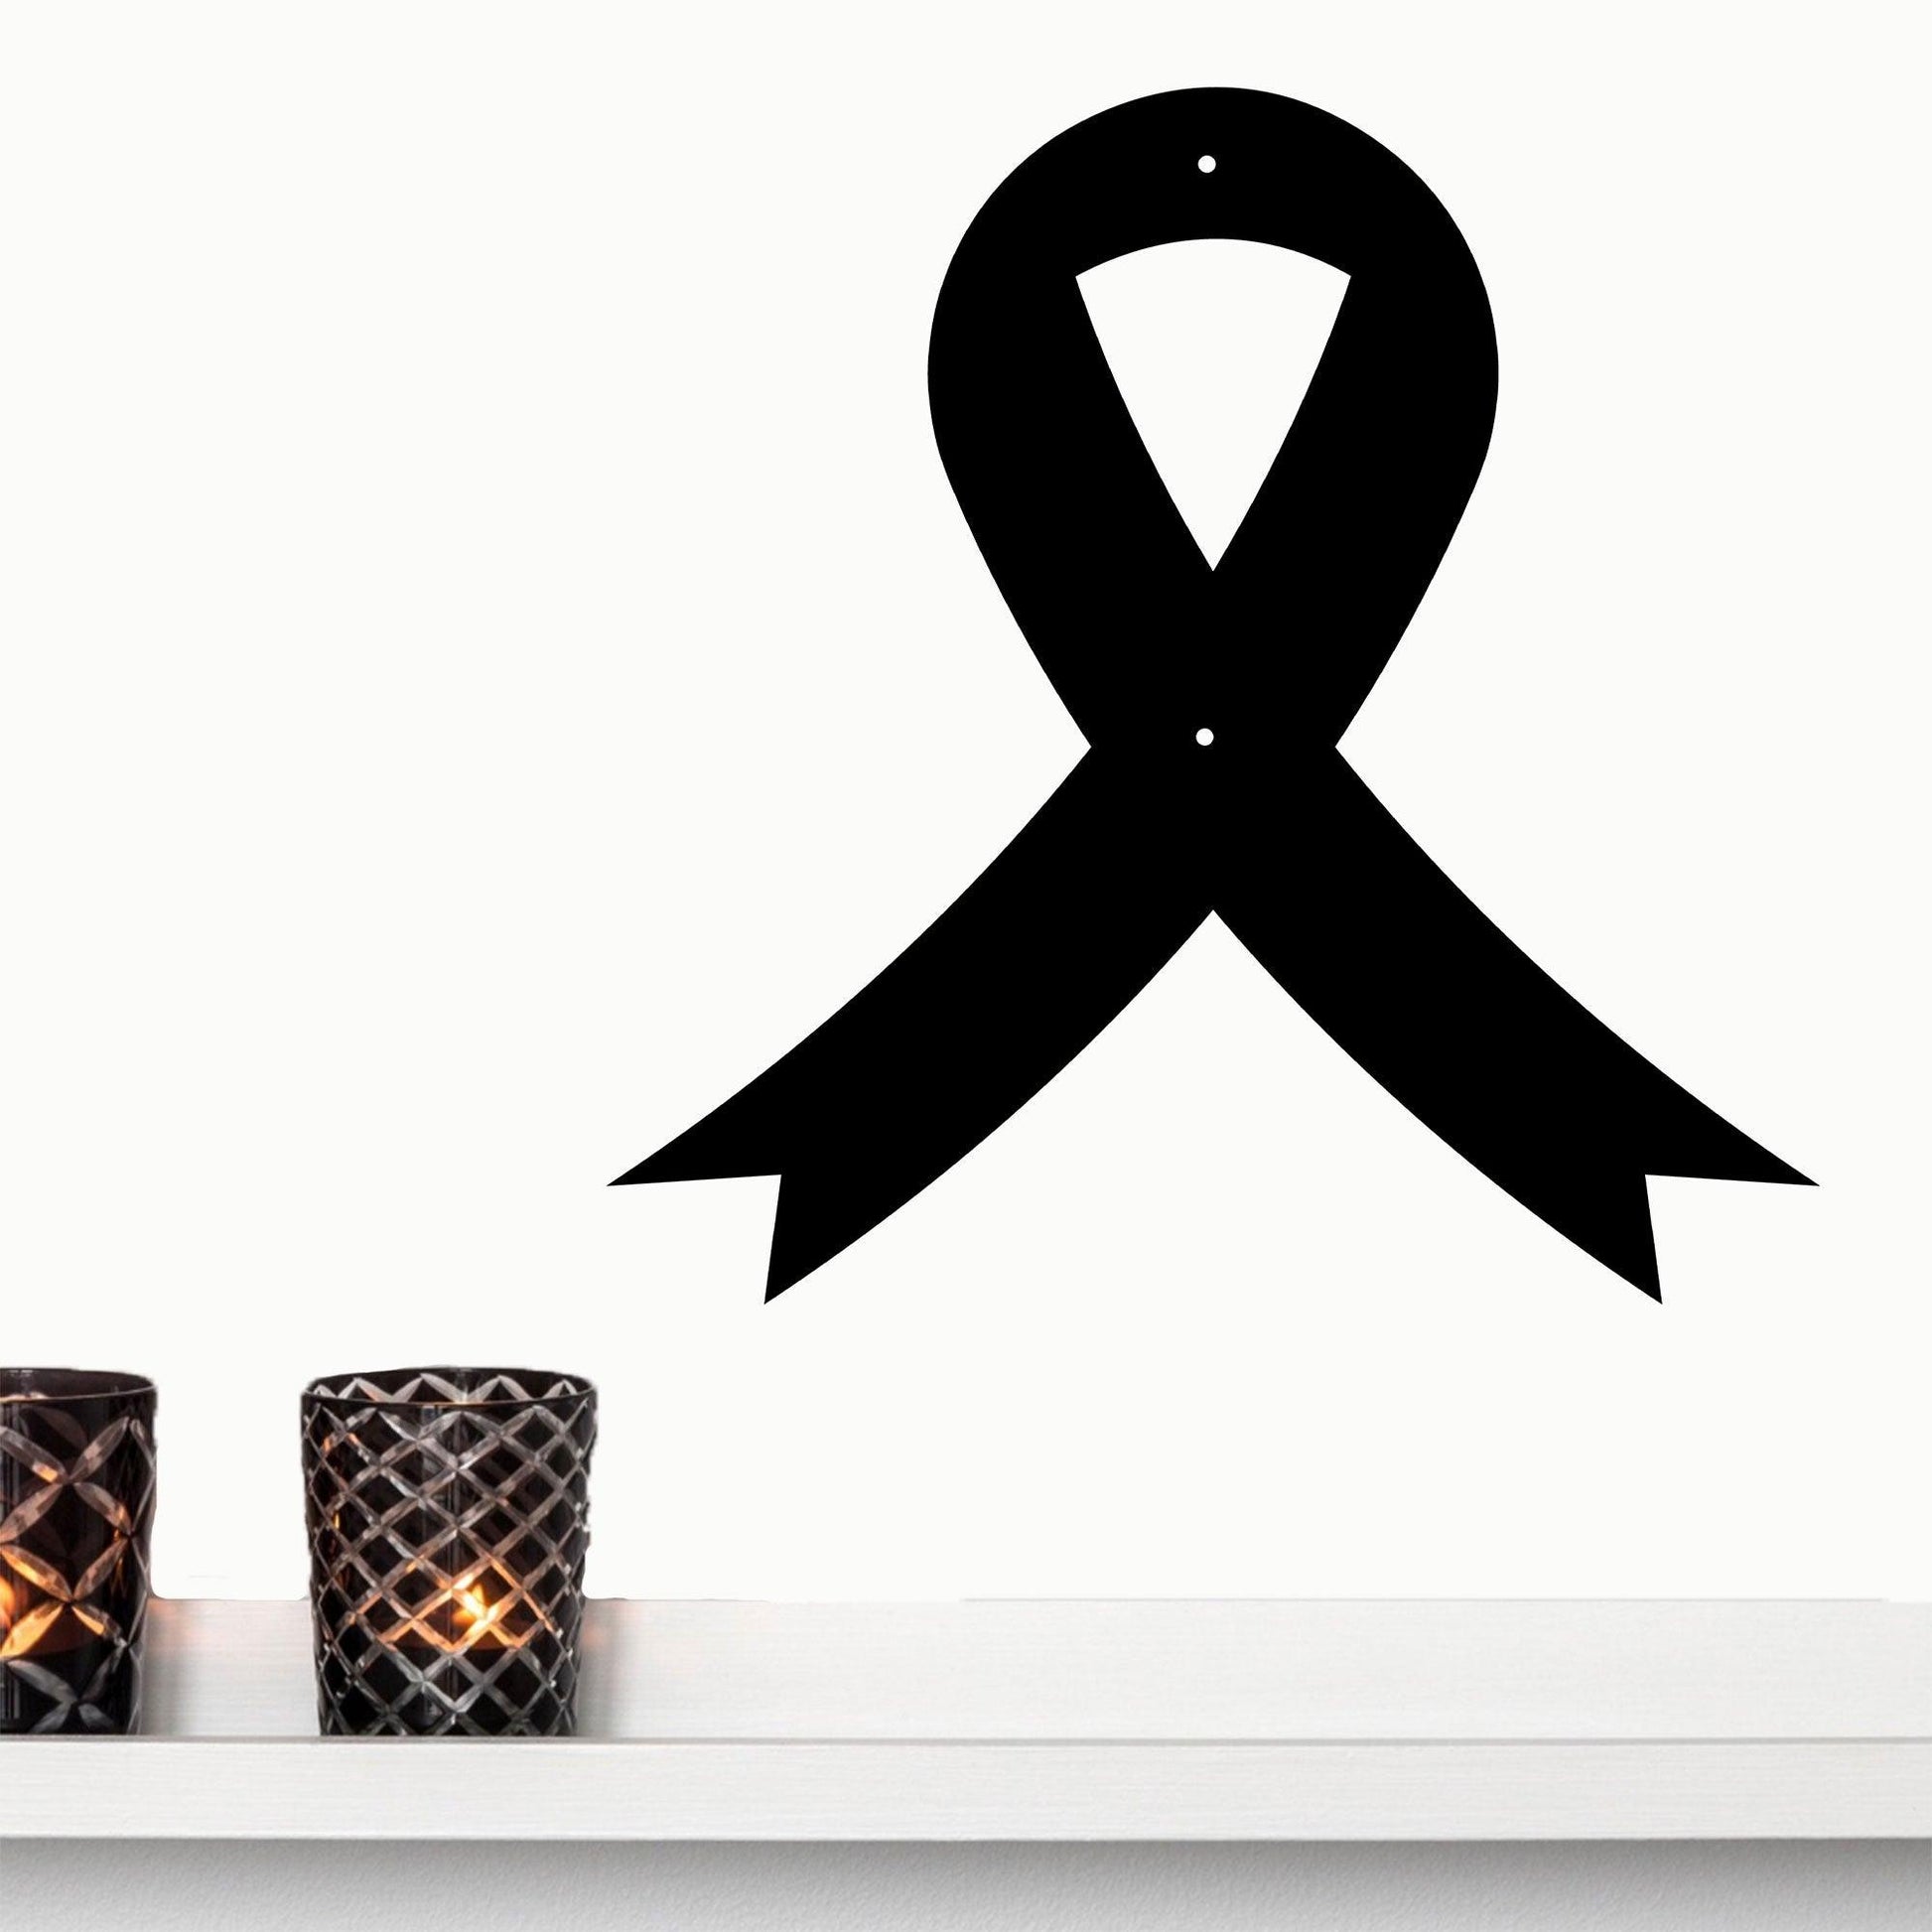 Cancer Awareness Ribbon Metal Wall Art Sign - Mallard Moon Gift Shop